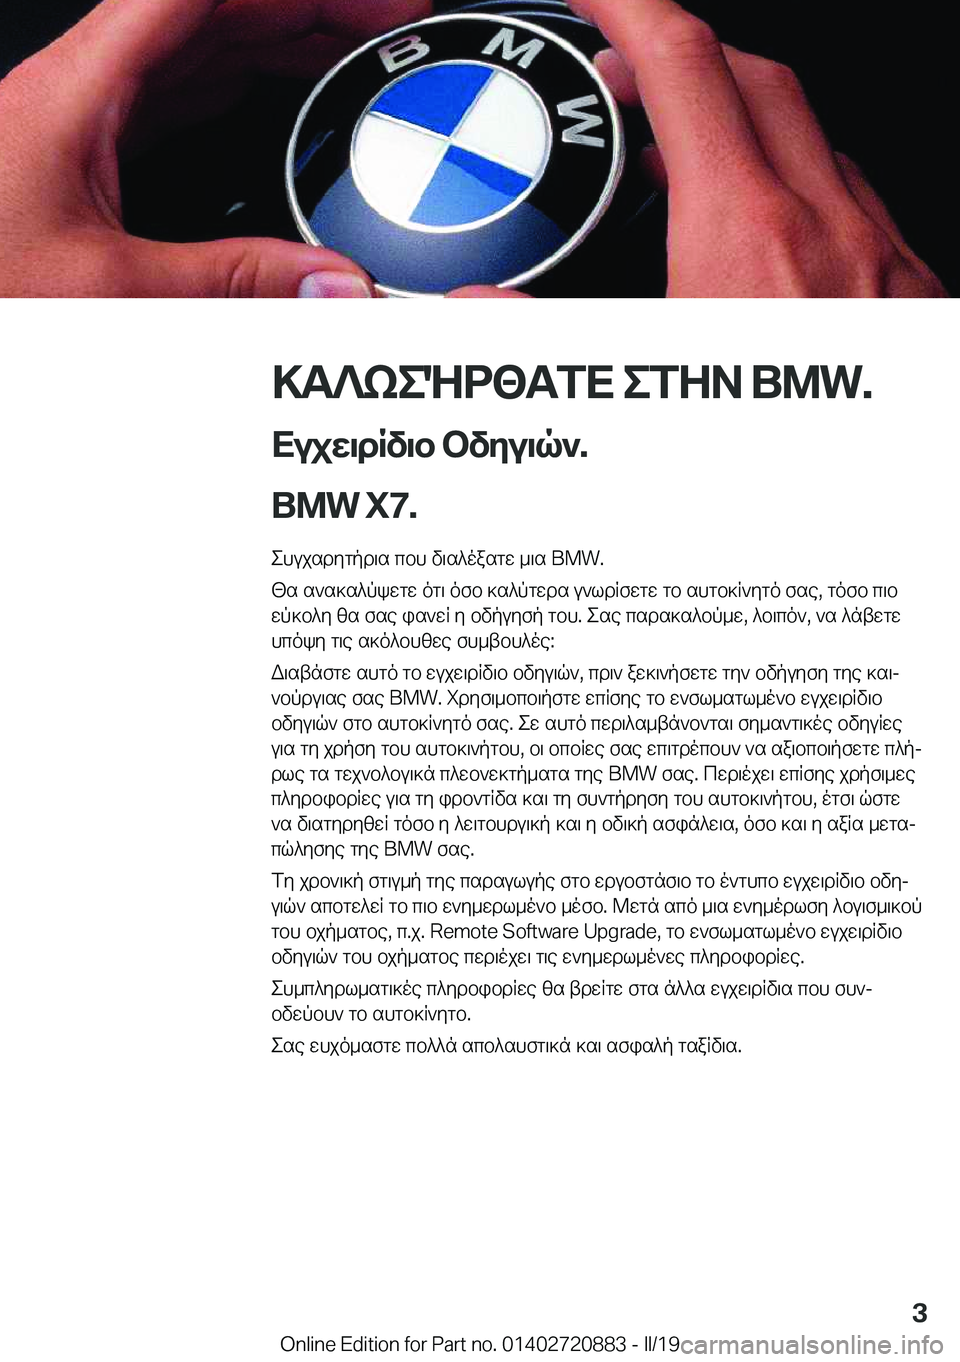 BMW X7 2019  ΟΔΗΓΌΣ ΧΡΉΣΗΣ (in Greek) >T?keNd<TfX�efZA��B�M�W�.
Xujw\dRv\b�bvyu\q`�.
�B�M�W��X�7�. ehujsdygpd\s�cbh�v\s^oasgw�_\s��B�M�W�.
[s�s`s]s^pkwgw�o